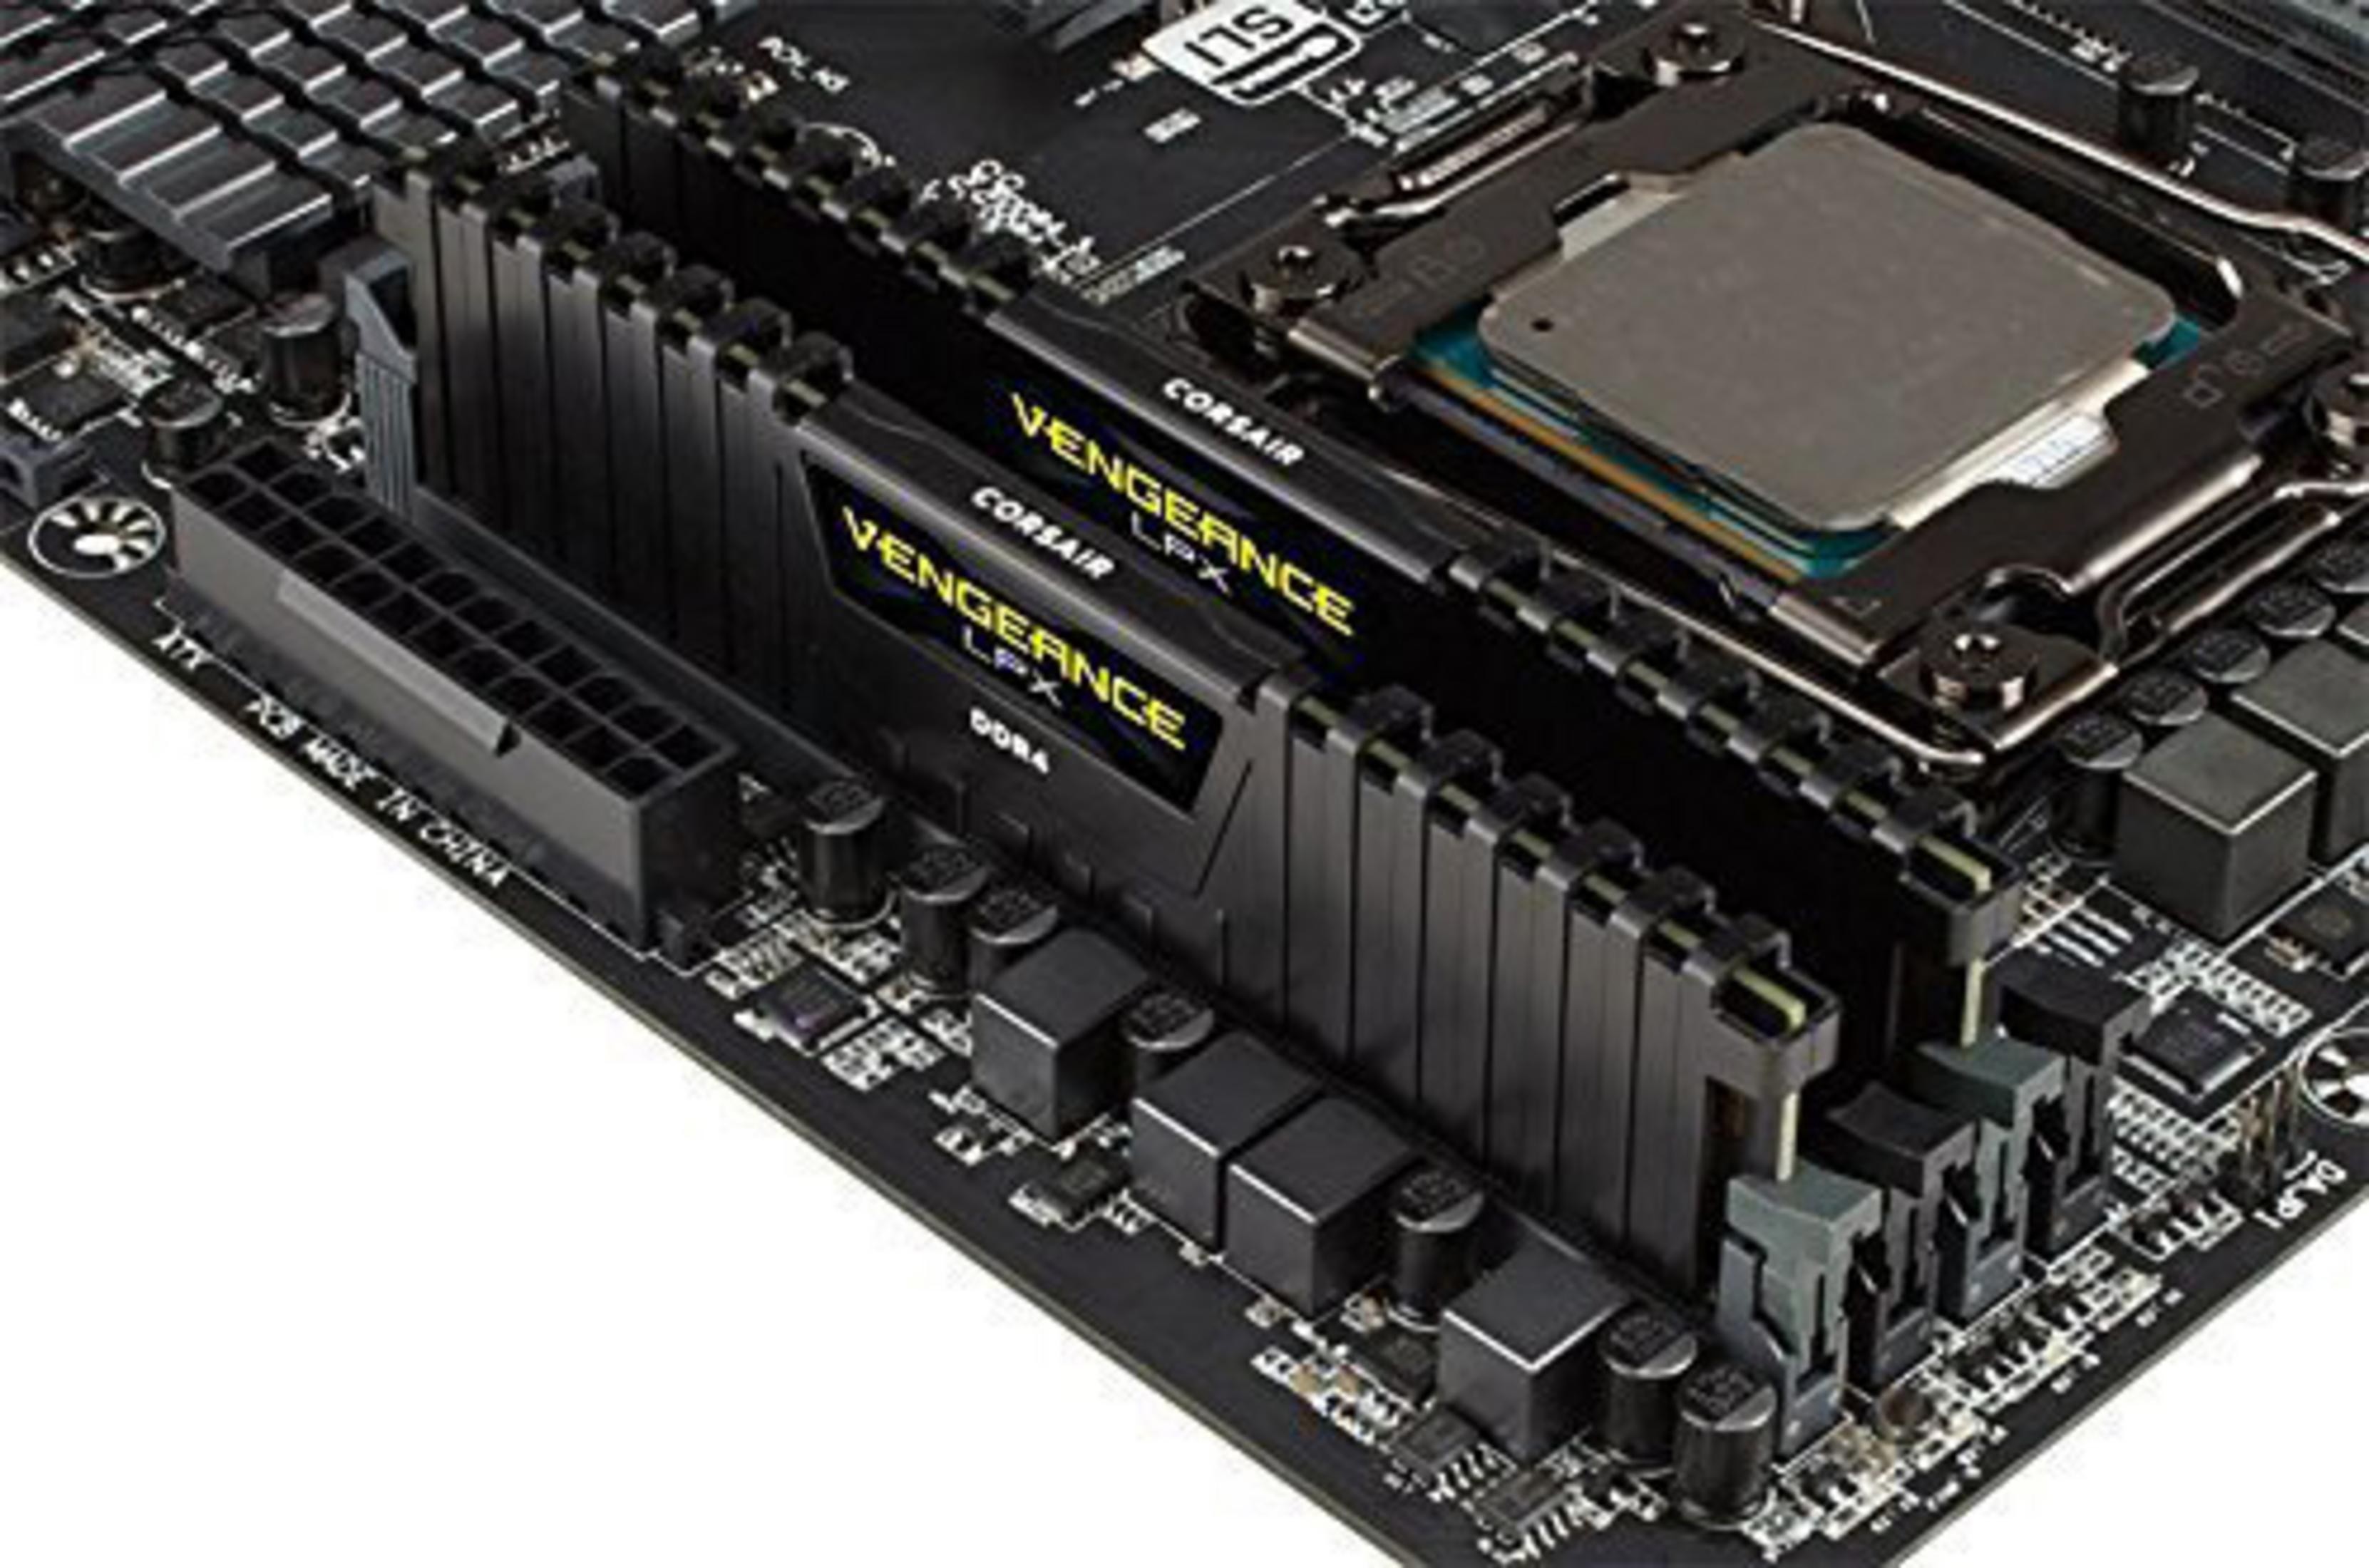 DDR4 2133MHZ CORSAIR 16 DDR4 GB LPX Arbeitsspeicher CMK16GX4M2A2133C13 VENGEANCE 16GB